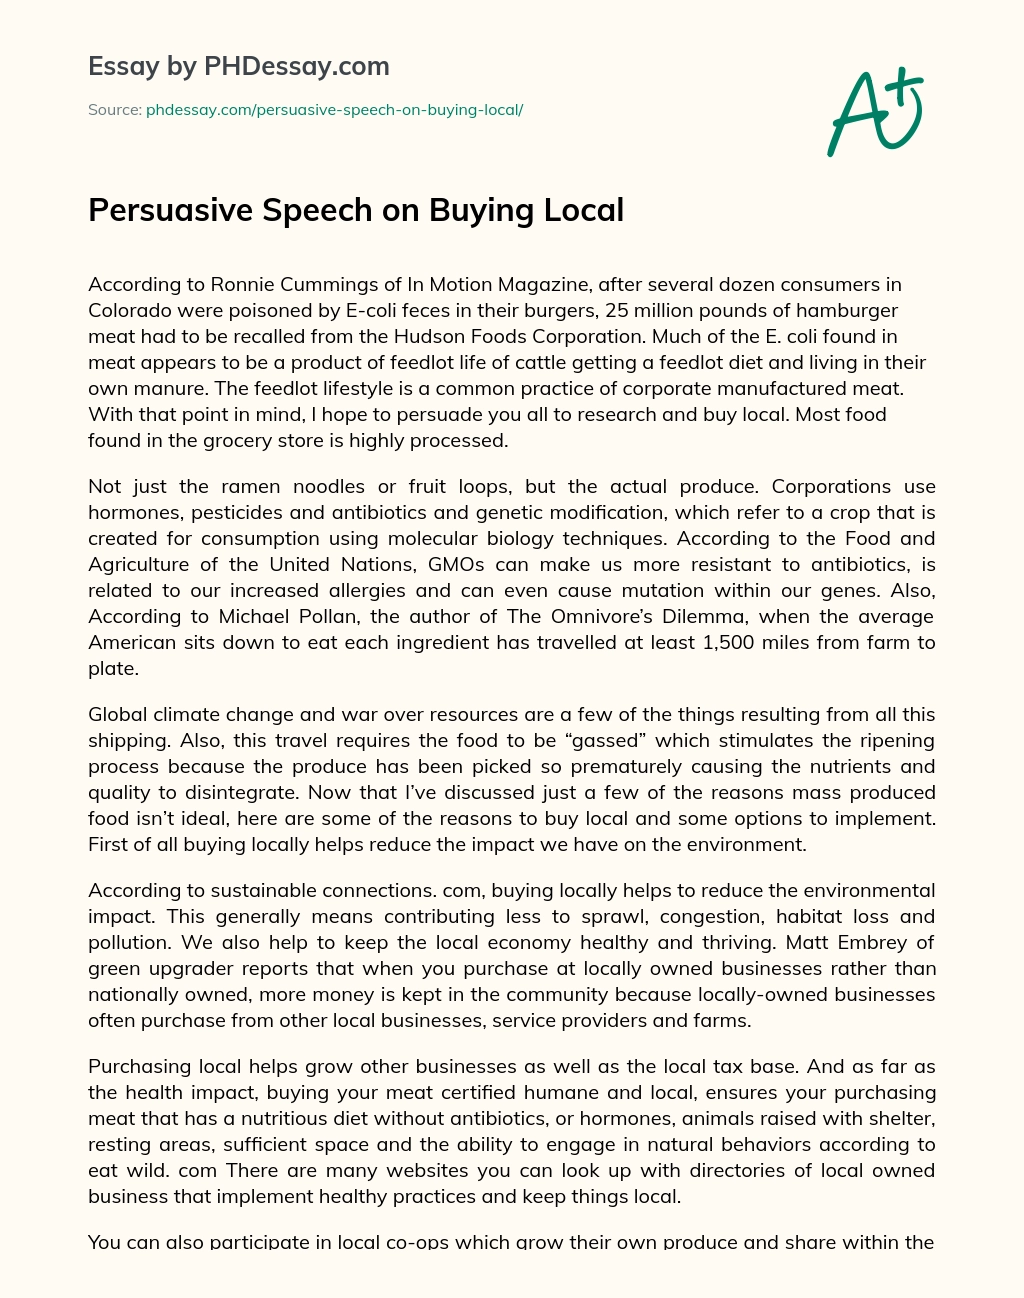 Persuasive Speech on Buying Local essay